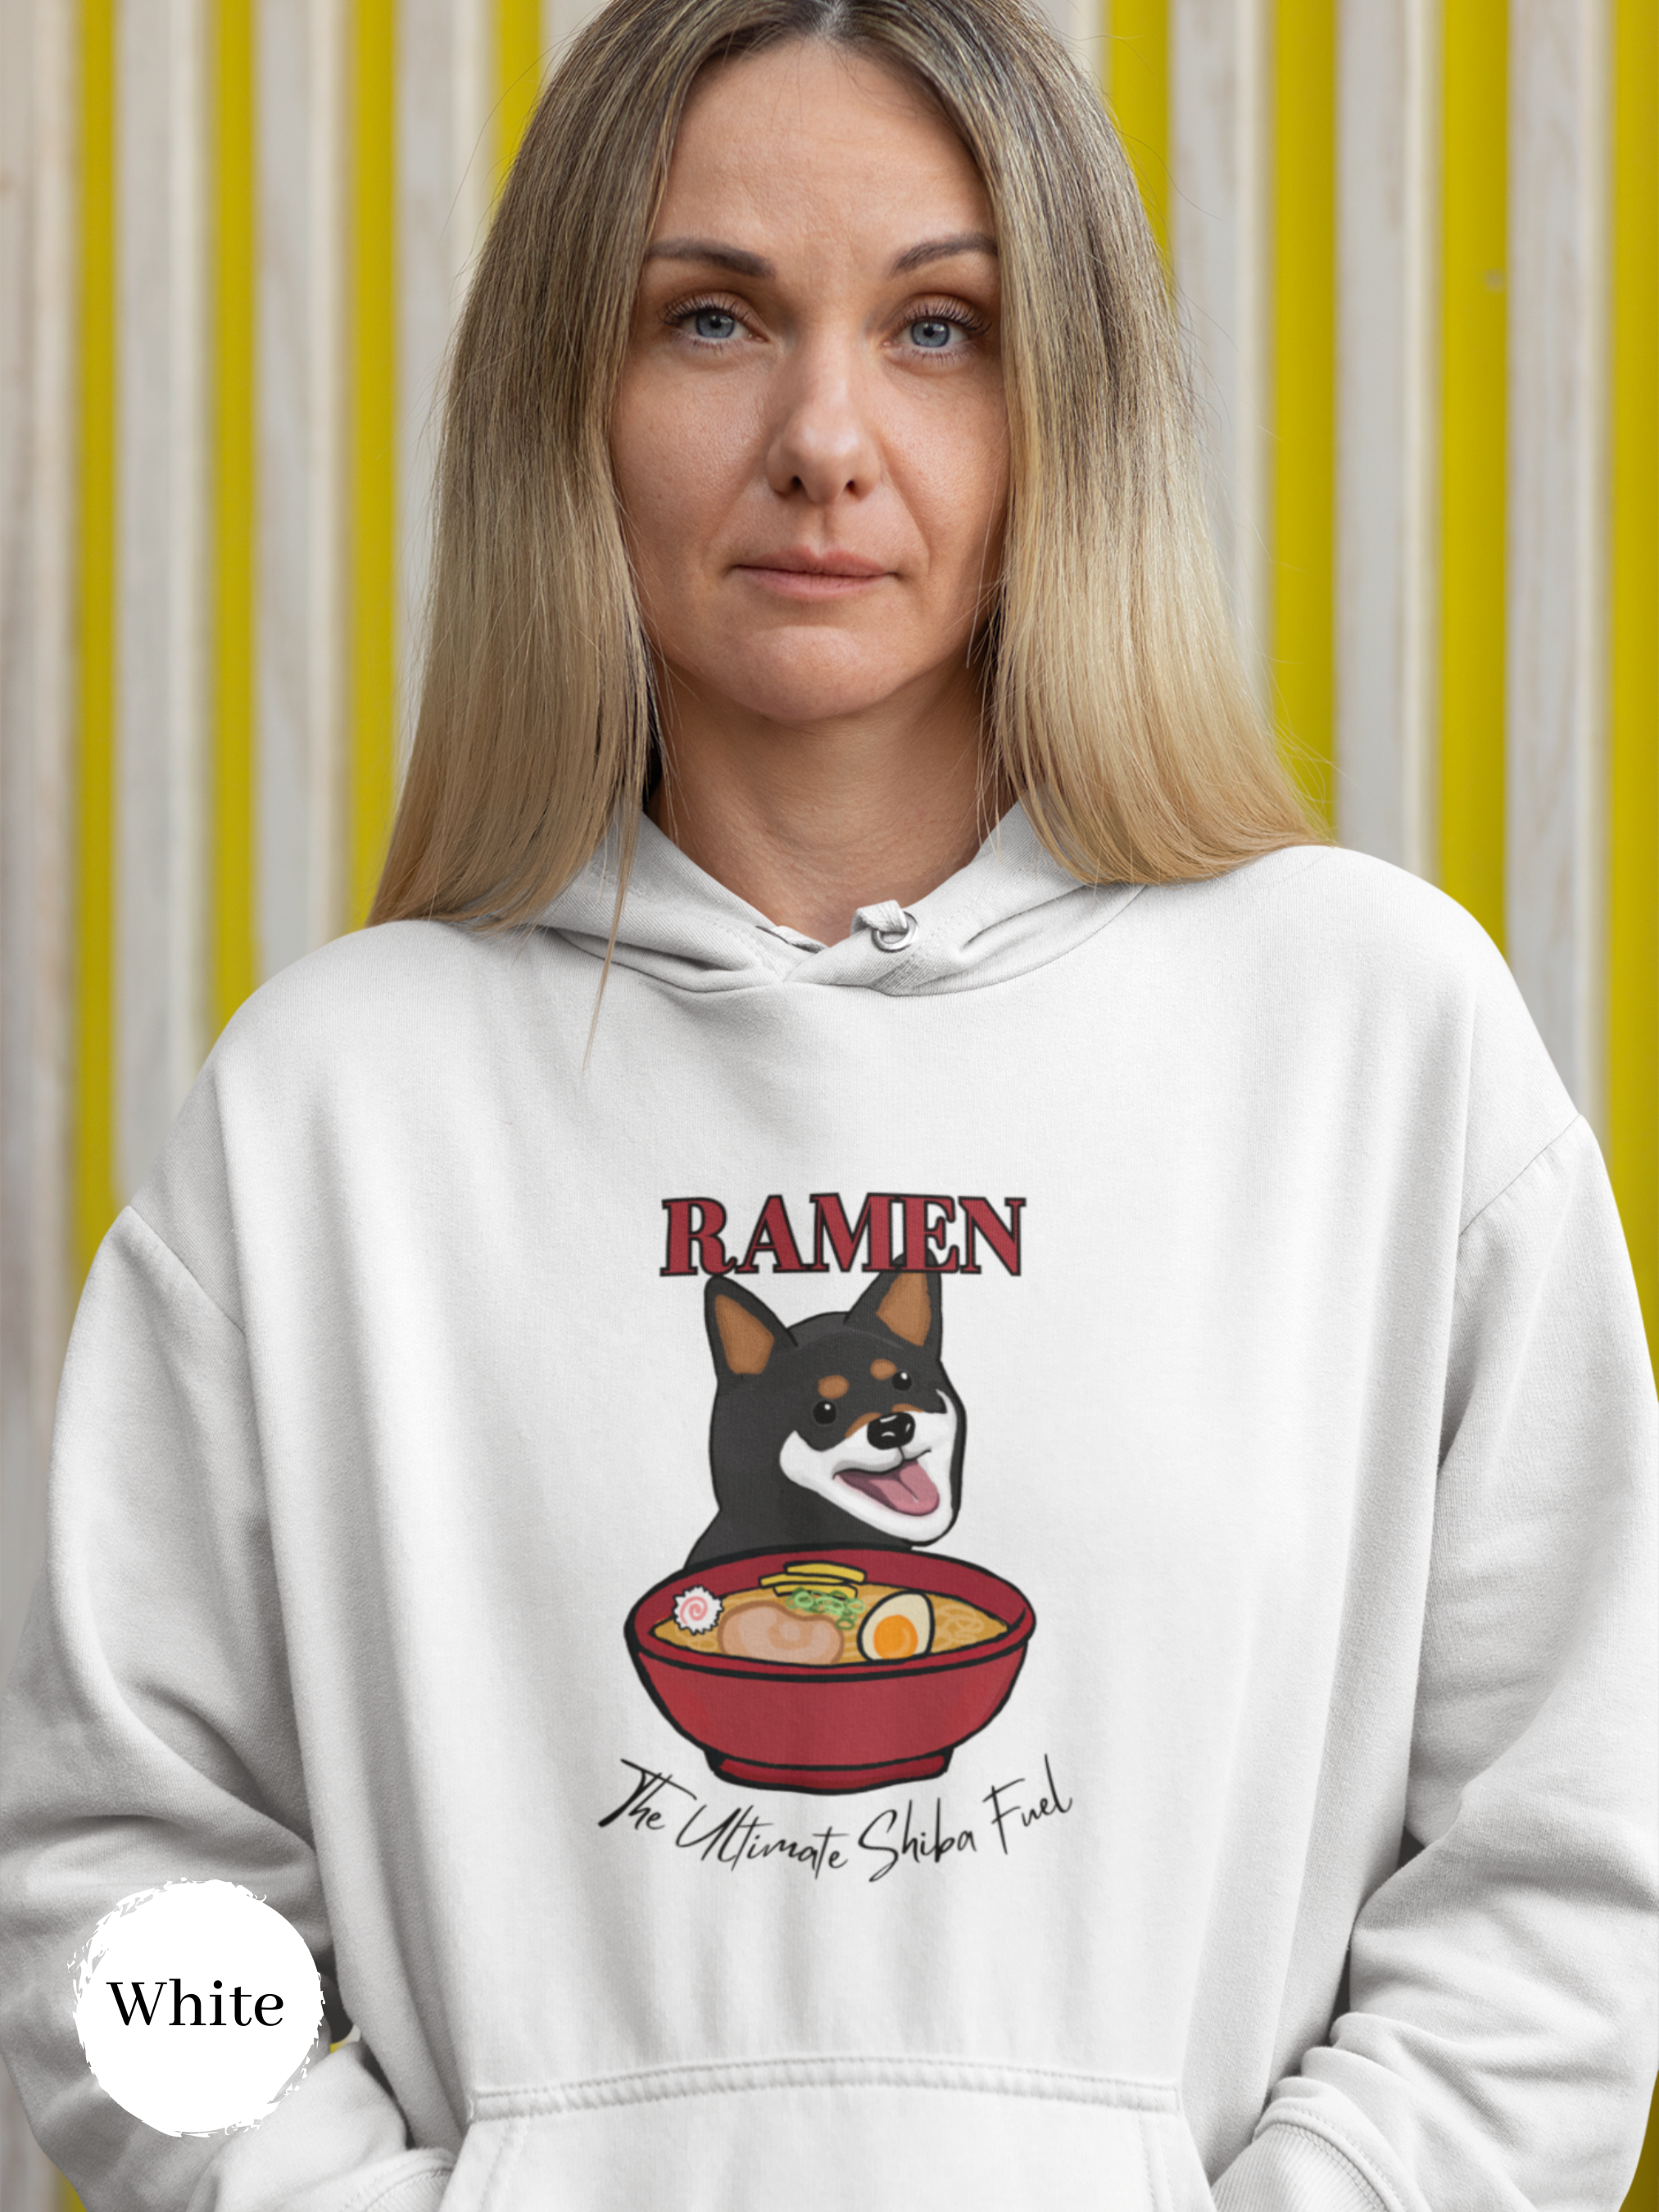 Ramen Hoodie - "Ramen the Ultimate Shiba Fuel" featuring a Shiba Inu and Noodles